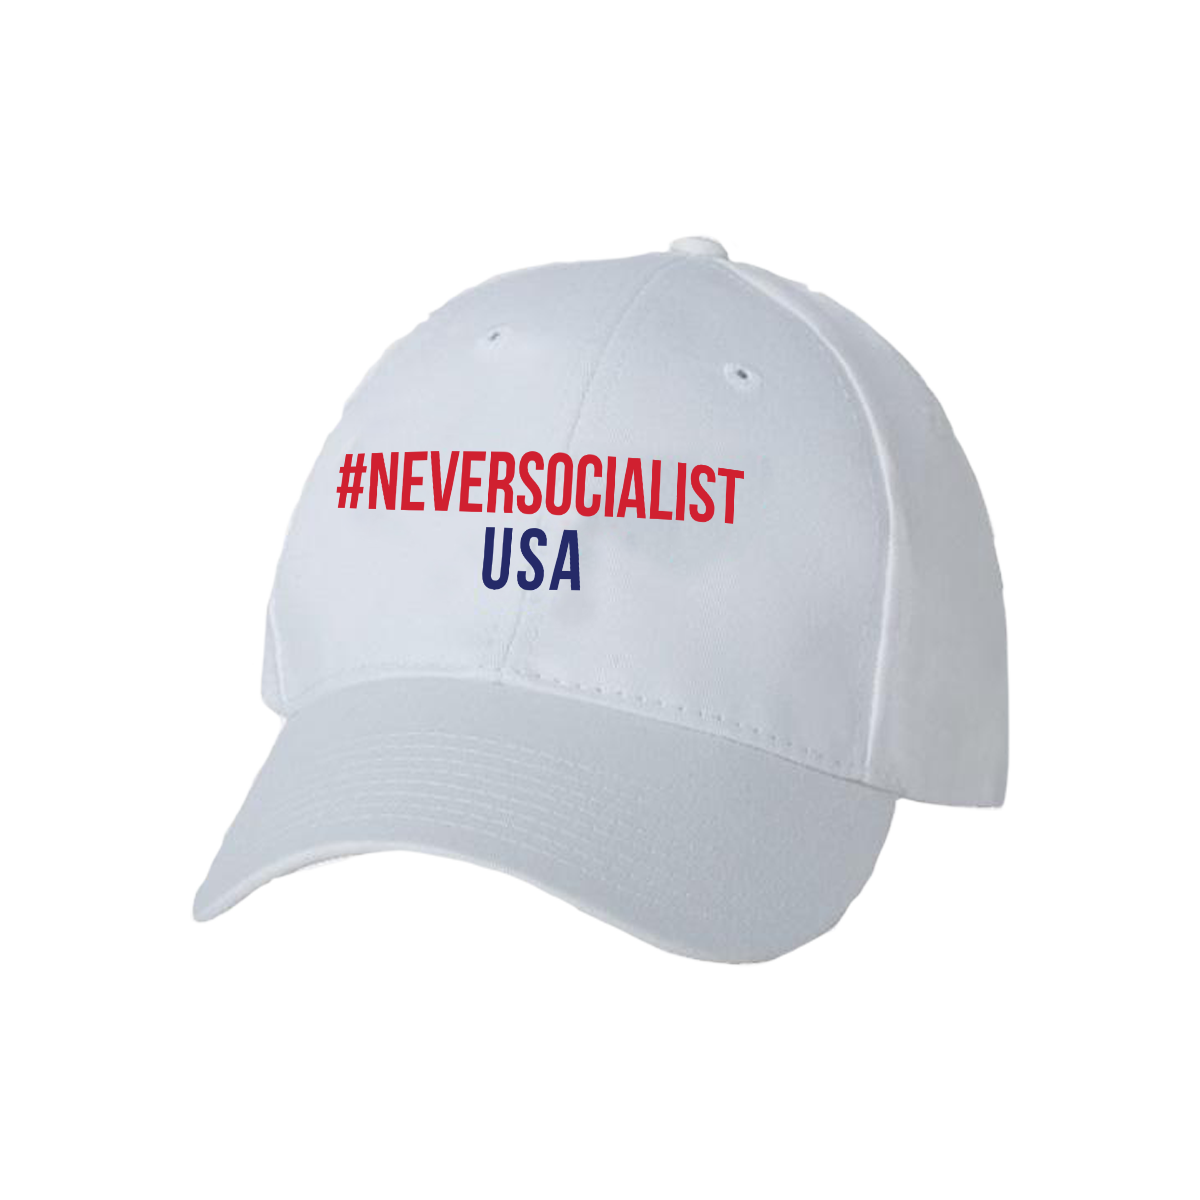 NeverSocialist USA Hat White